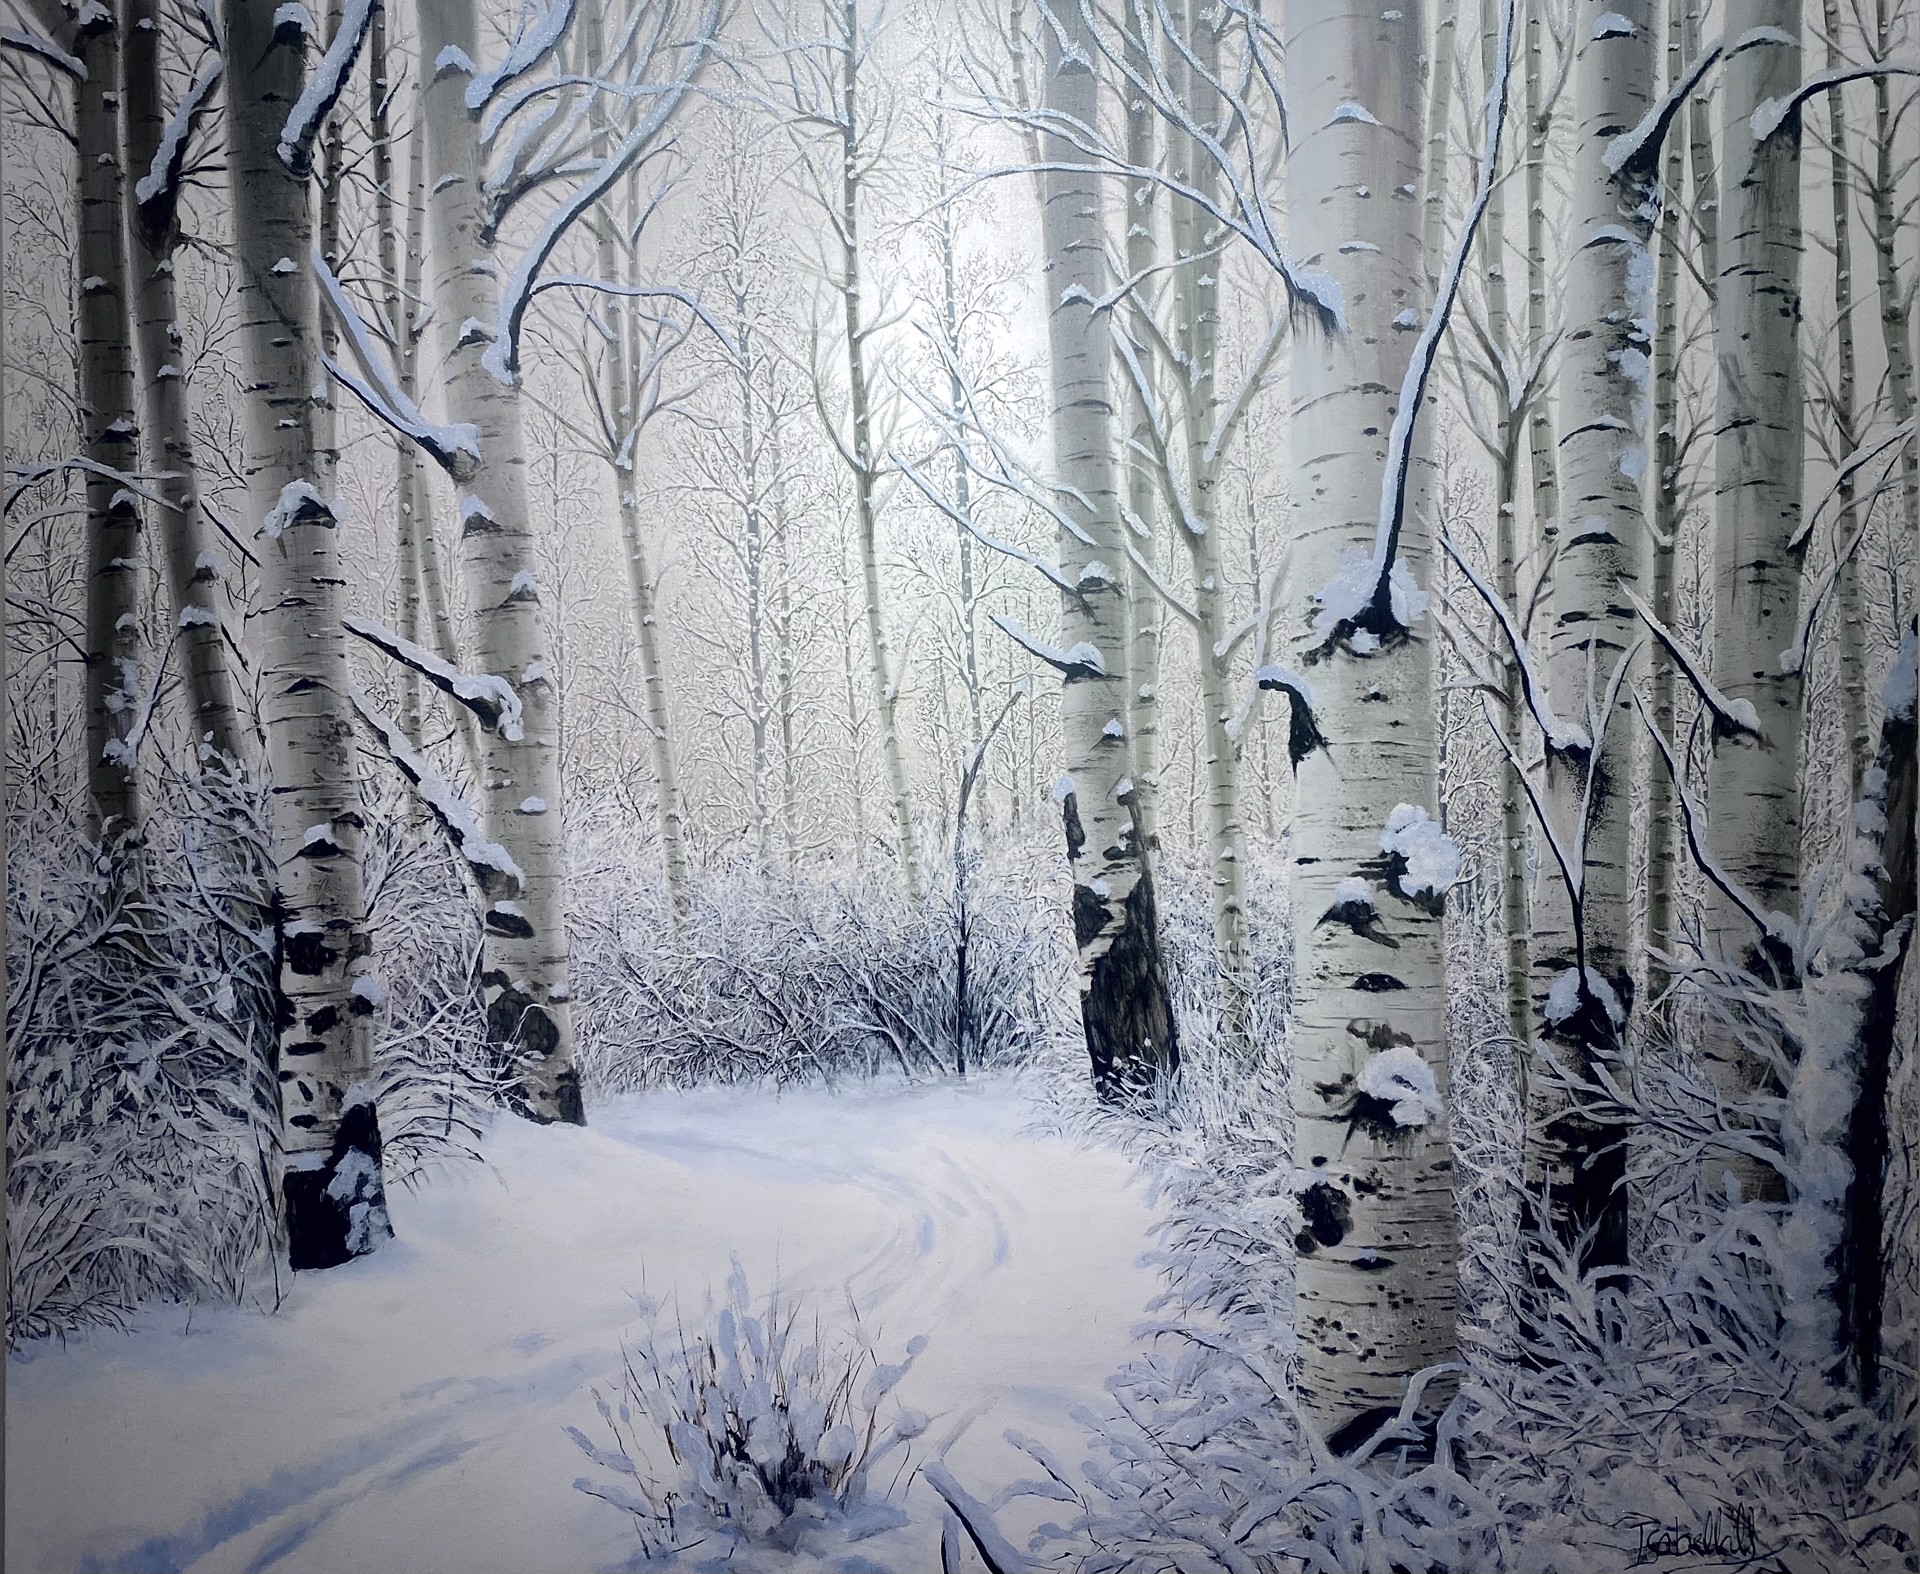 The Quietness of Winter by Isabella Garaffa